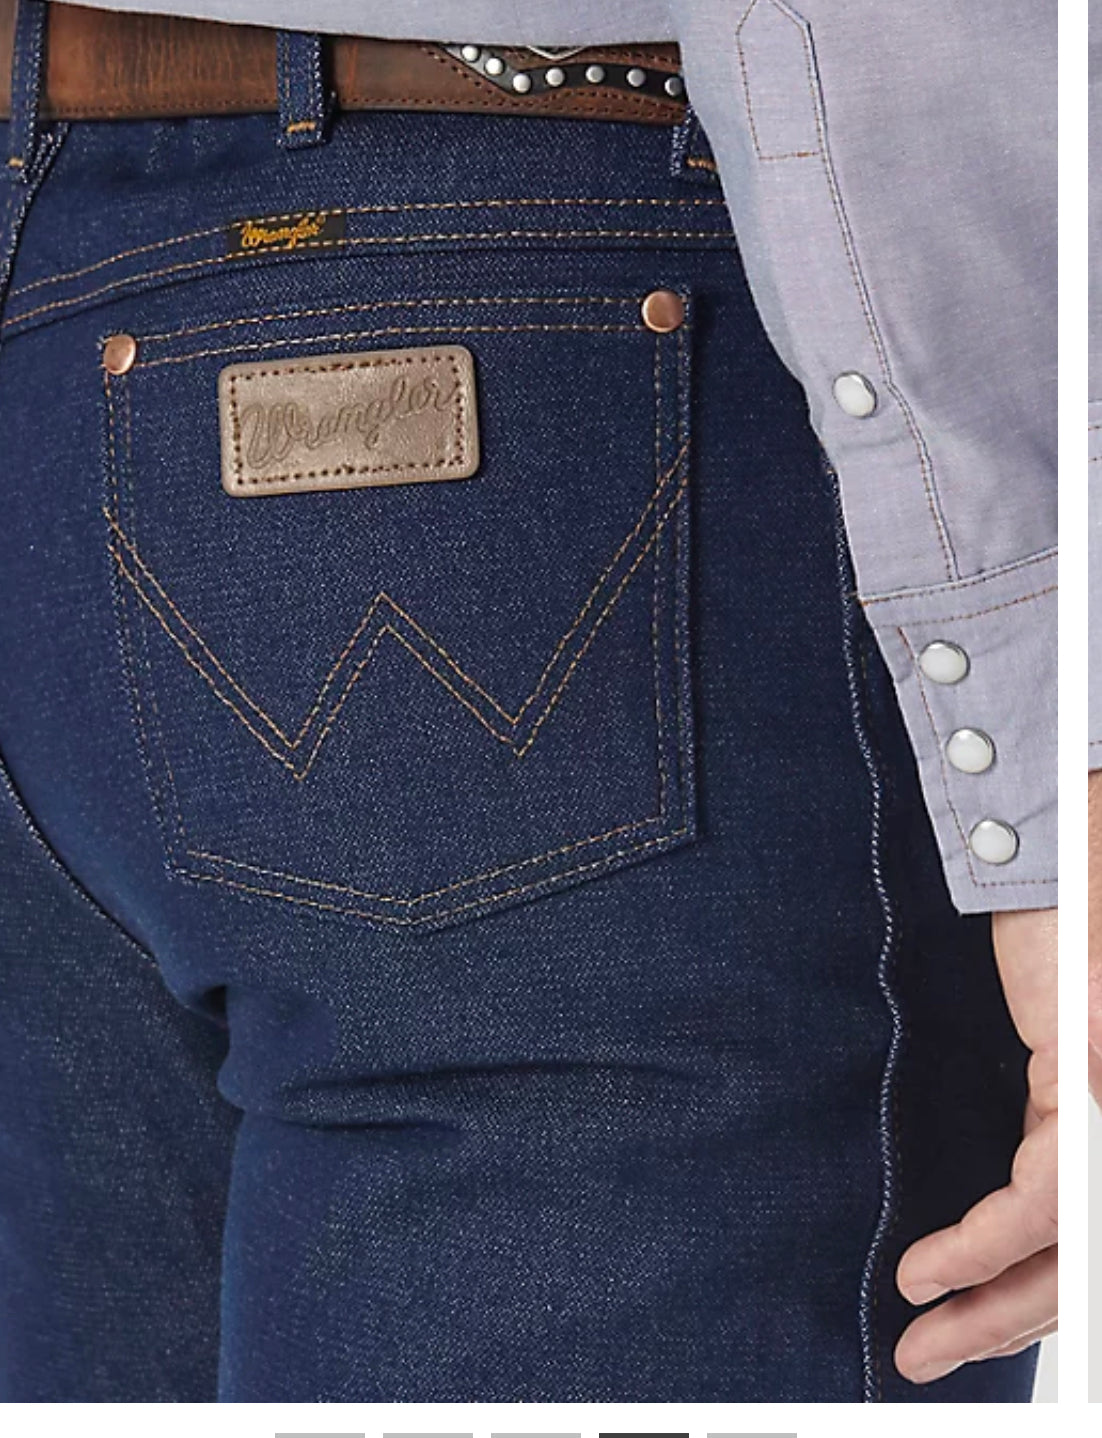 Wrangler Women's Cowboy Cut Slim Fit Jeans - Prewashed Indigo